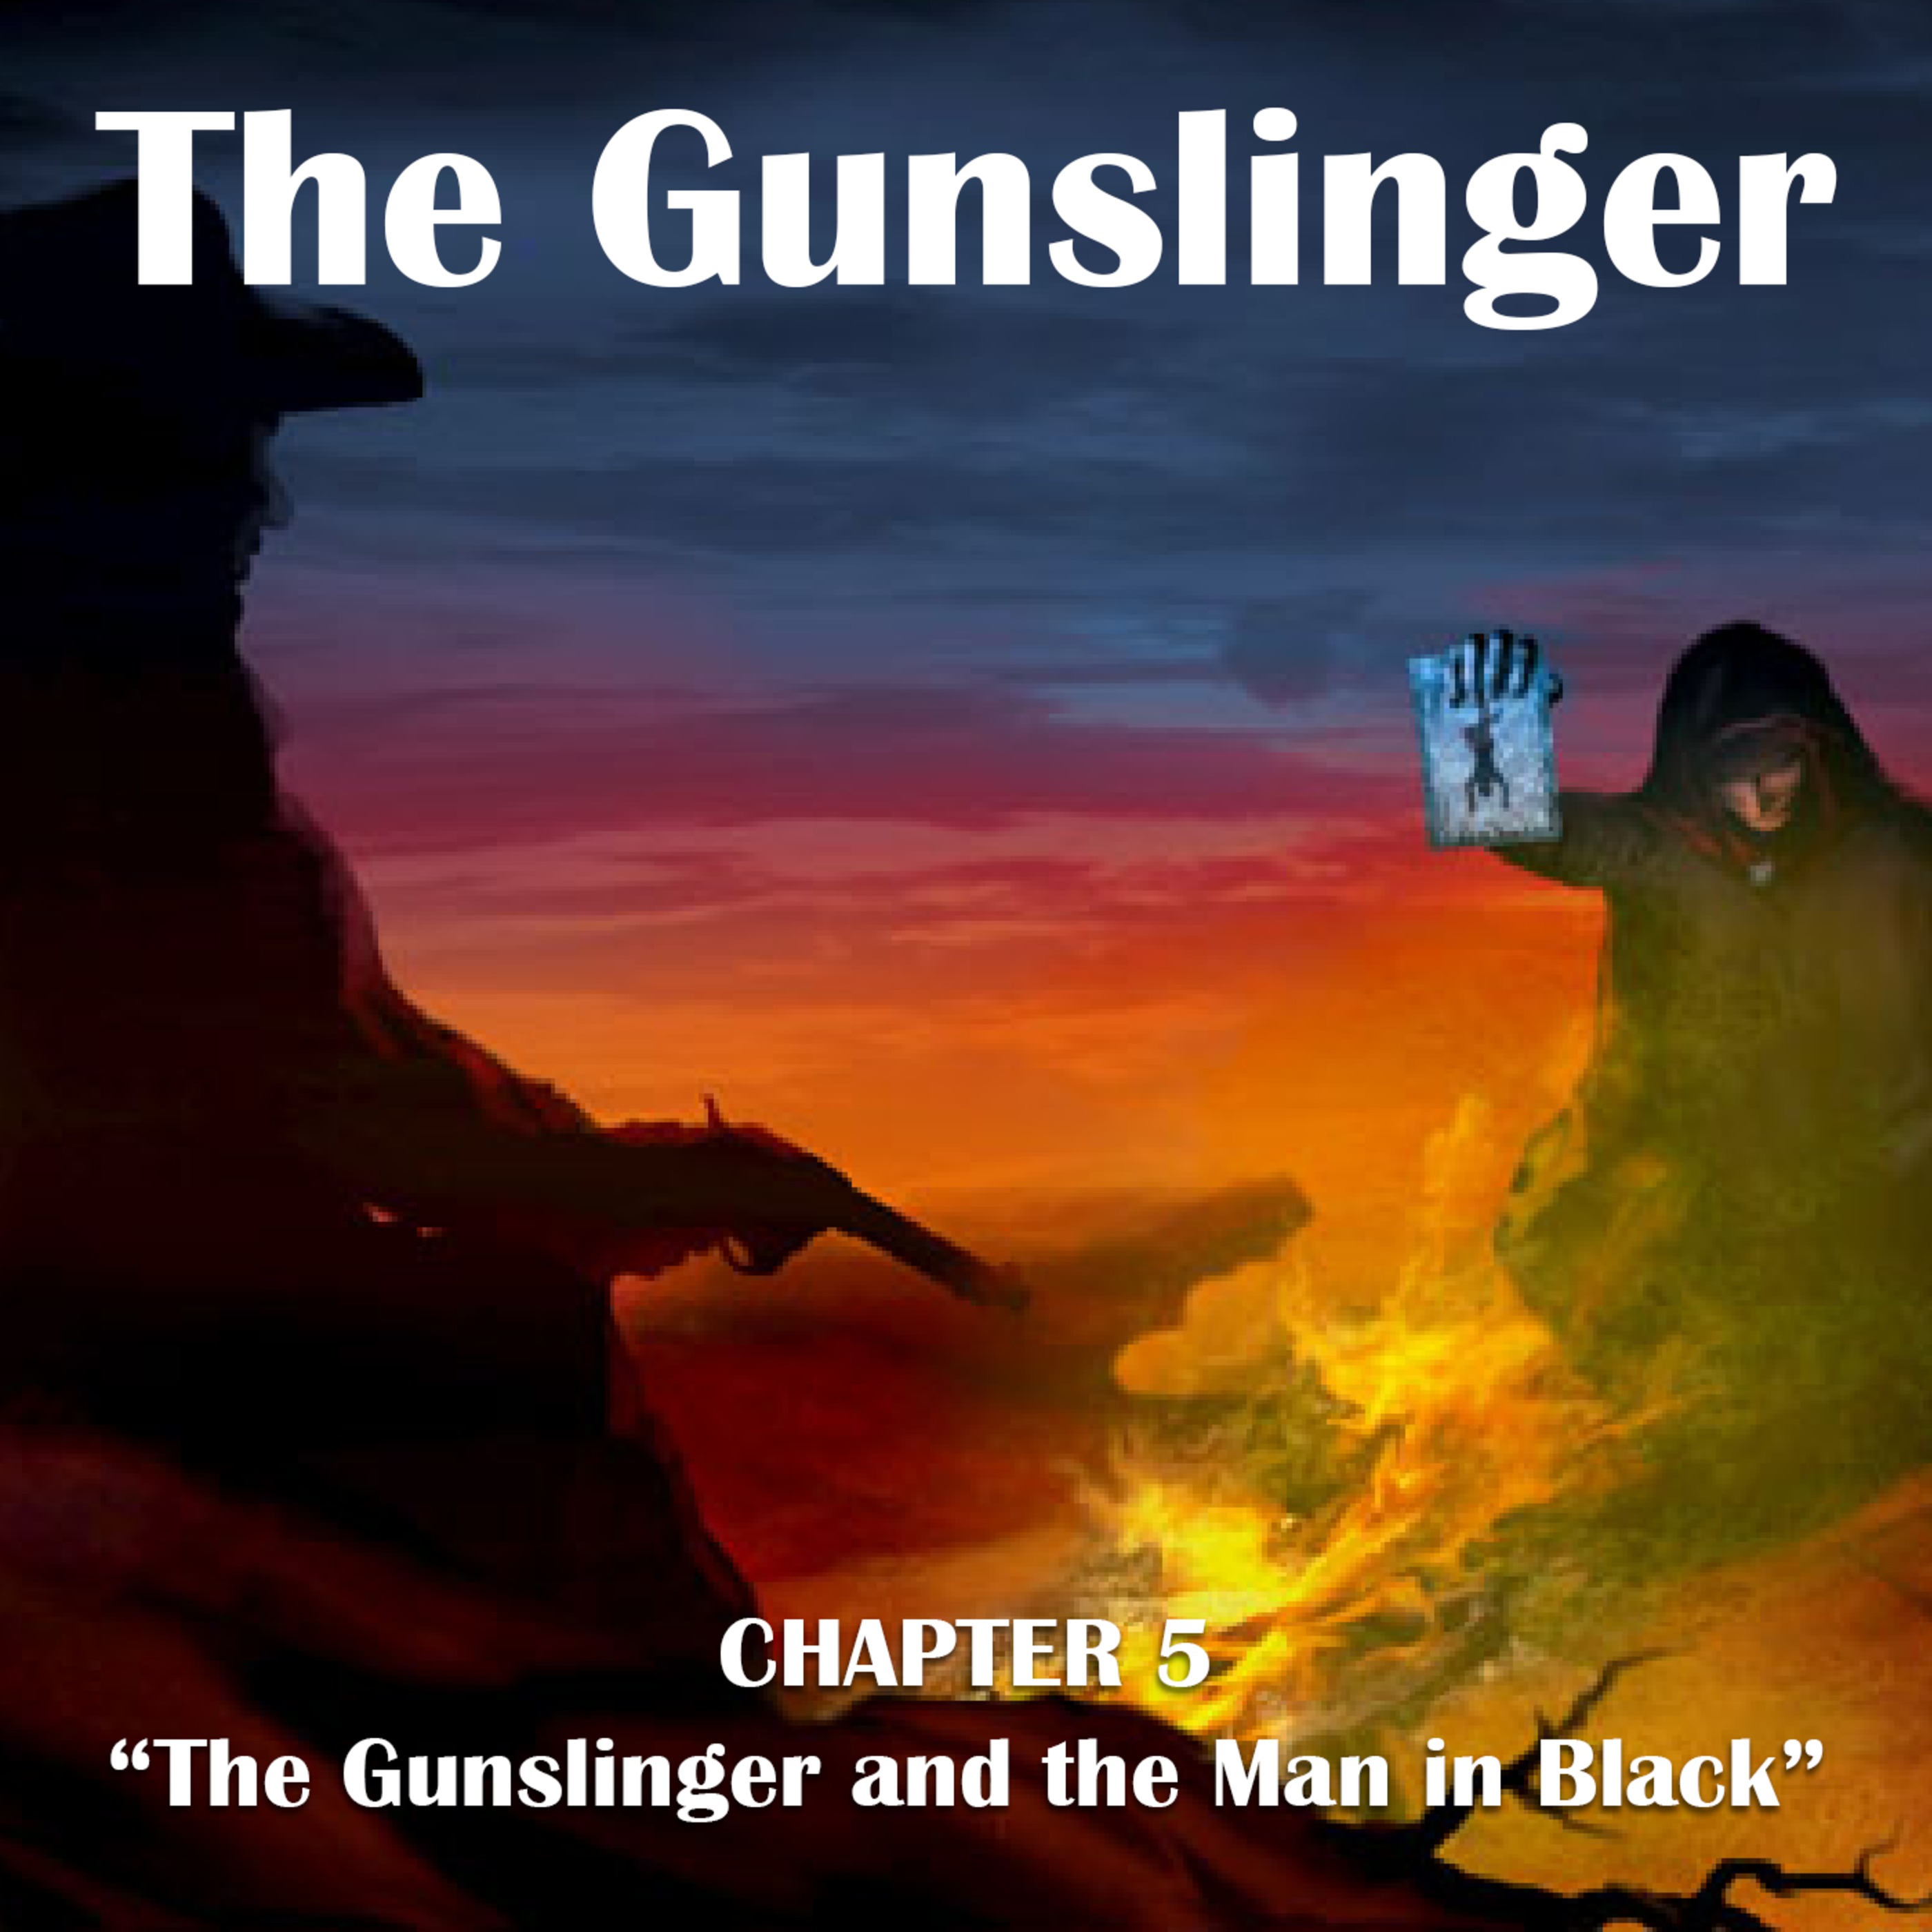 Episode 5: The Gunslinger, Chapter 5: ”The Gunslinger and the Man in Black”